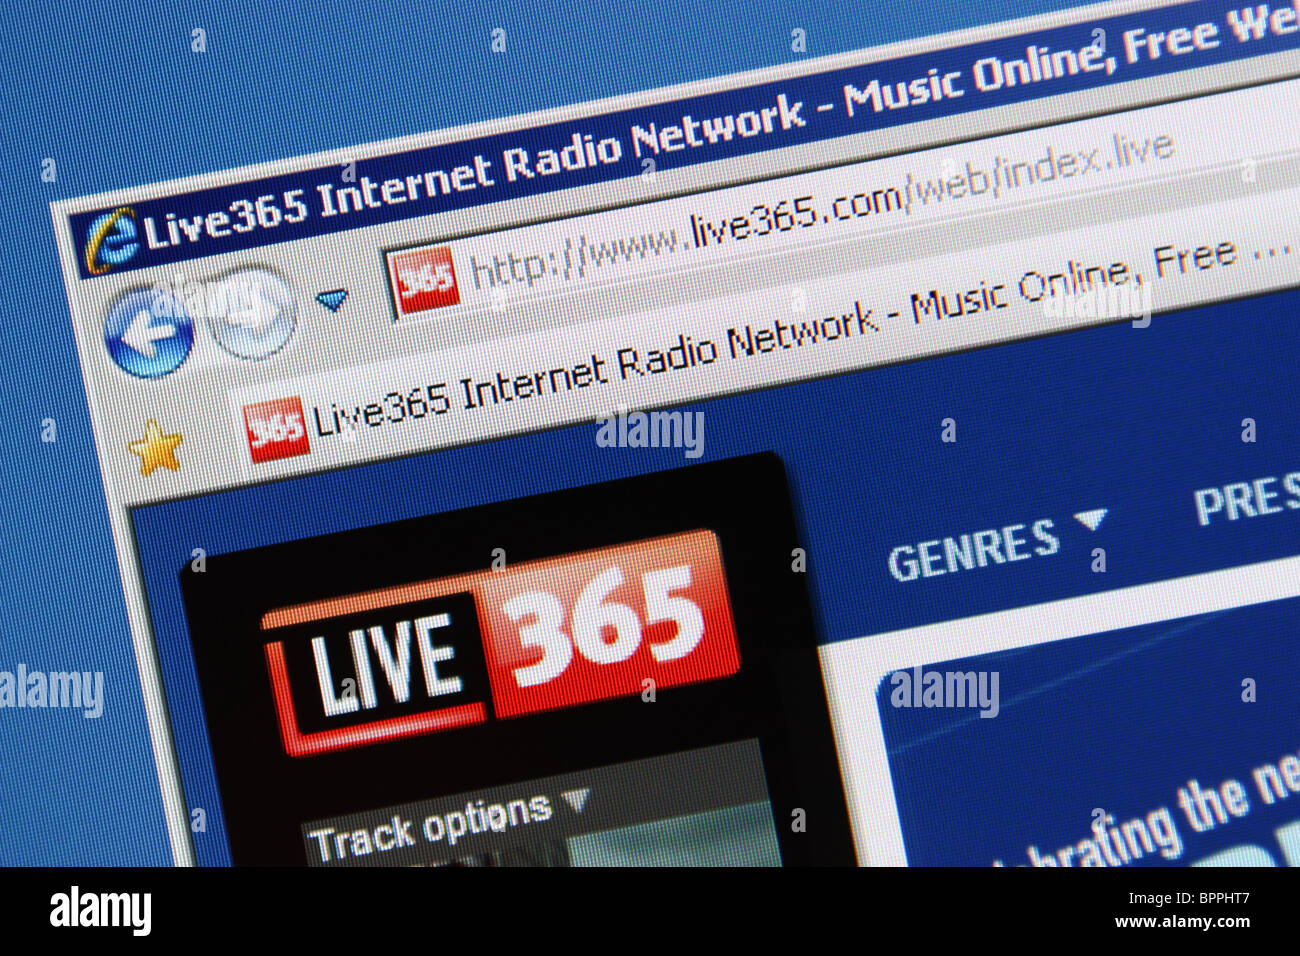 live365 live365.com internet radio network Stock Photo - Alamy